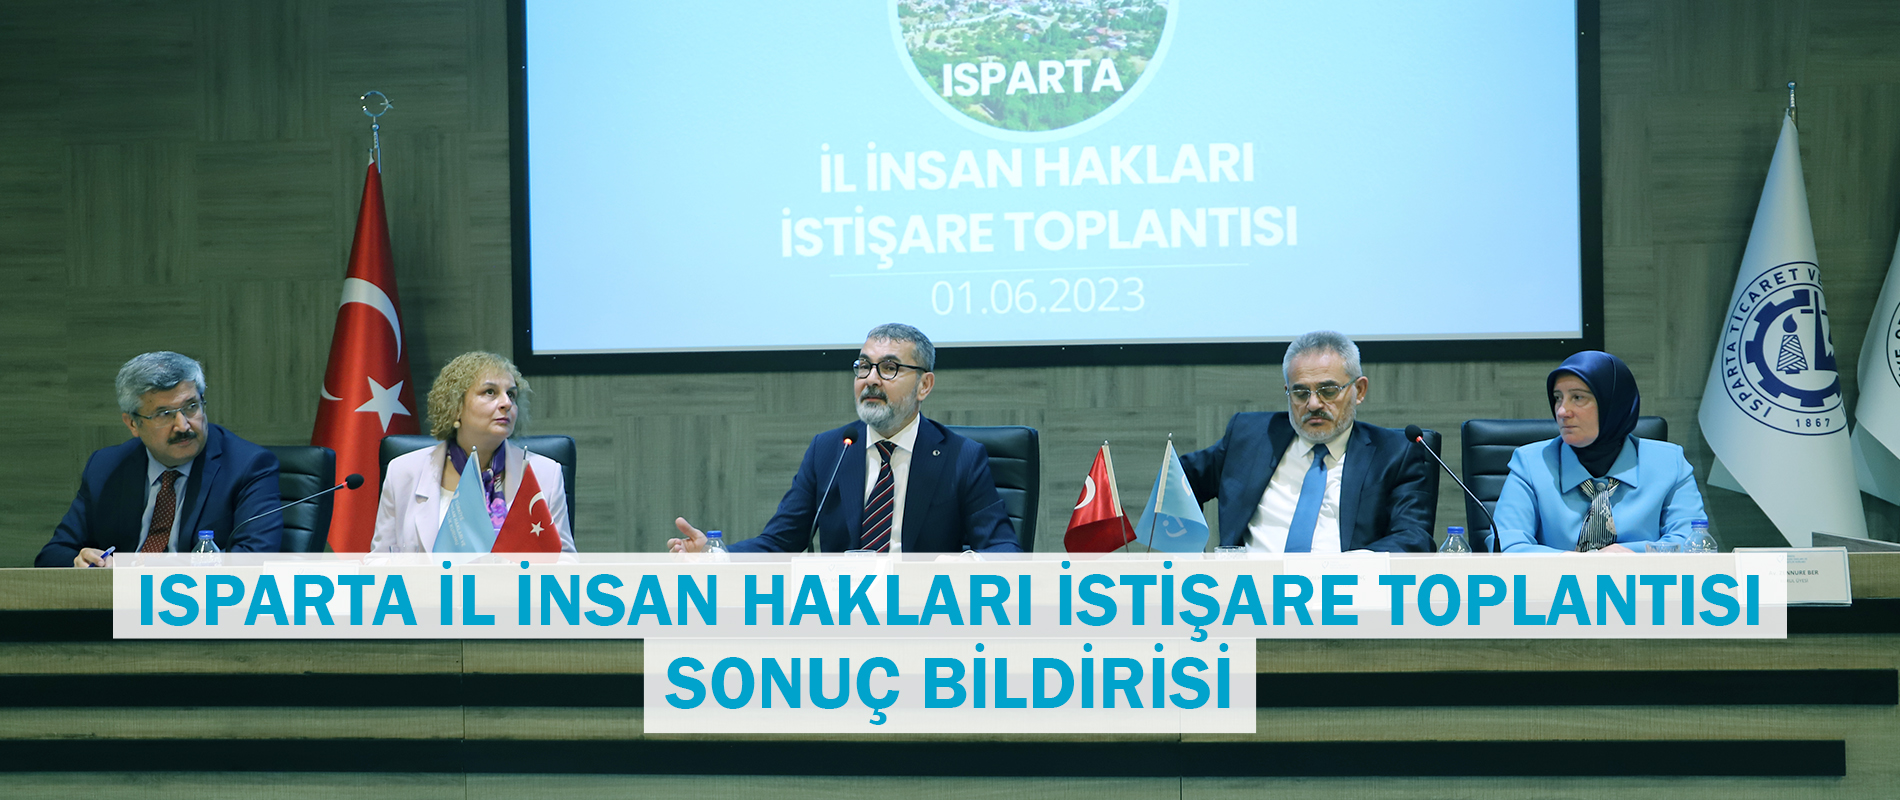 Isparta İl İnsan Hakları İstişare Toplantısı Sonuç Bildirisi Yayımlandı